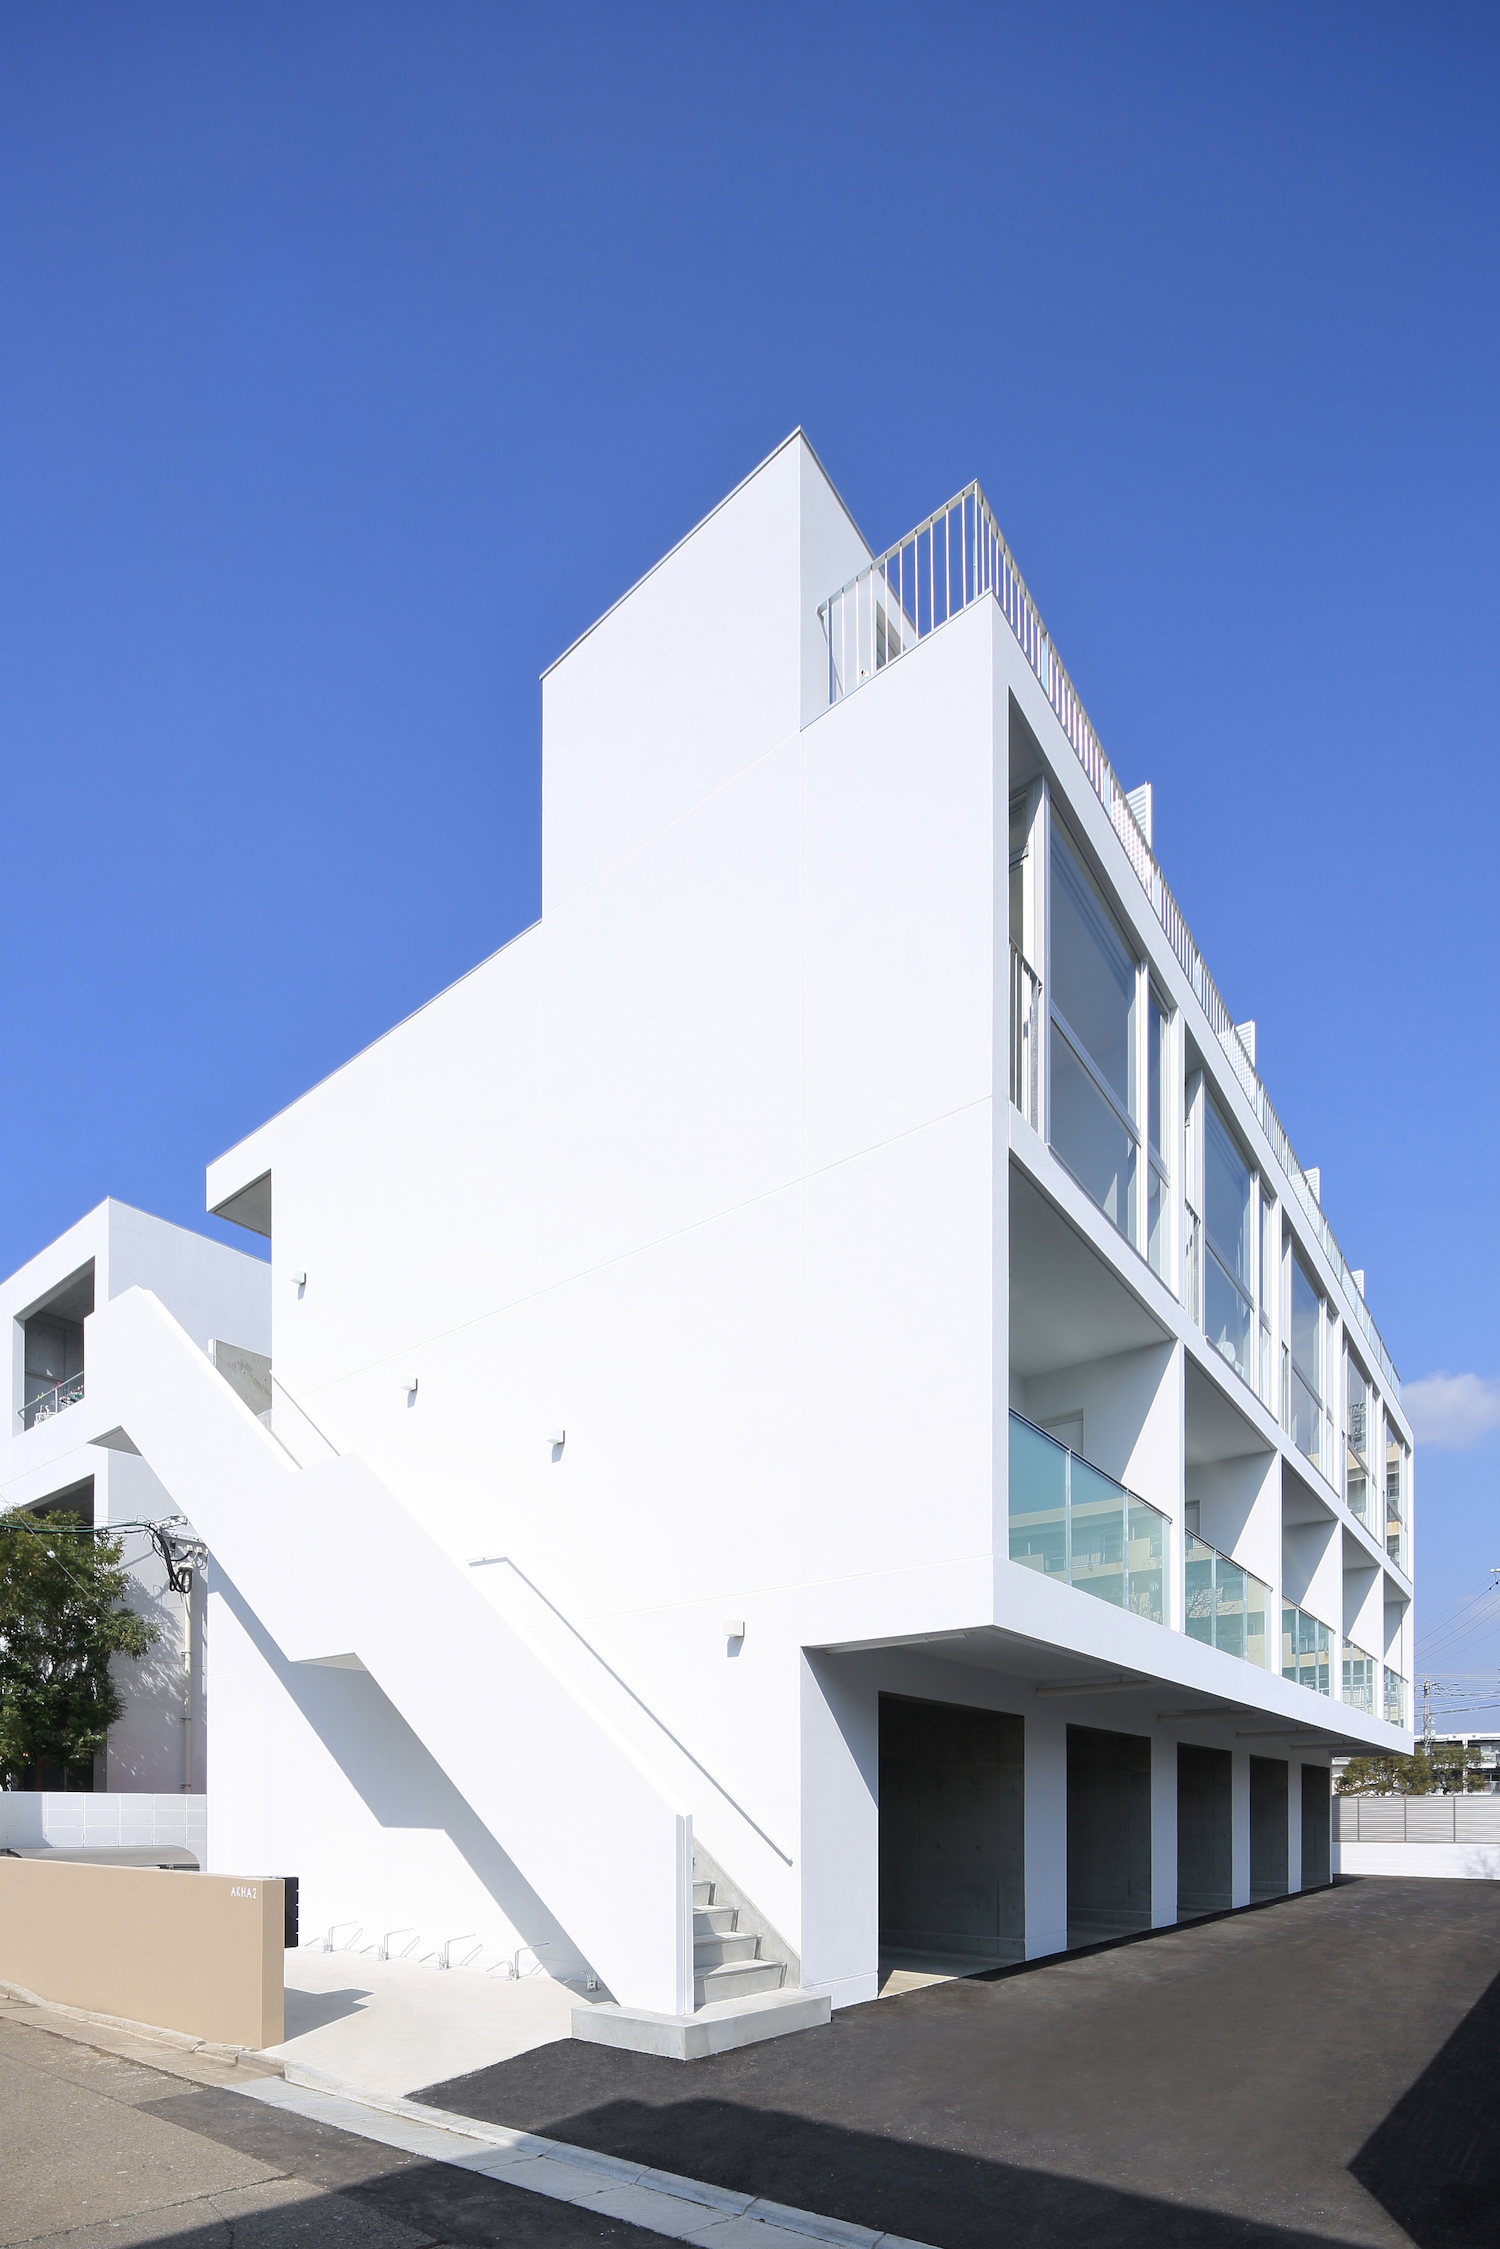 AKHA2 by Takeshi Ishiodori Architecture